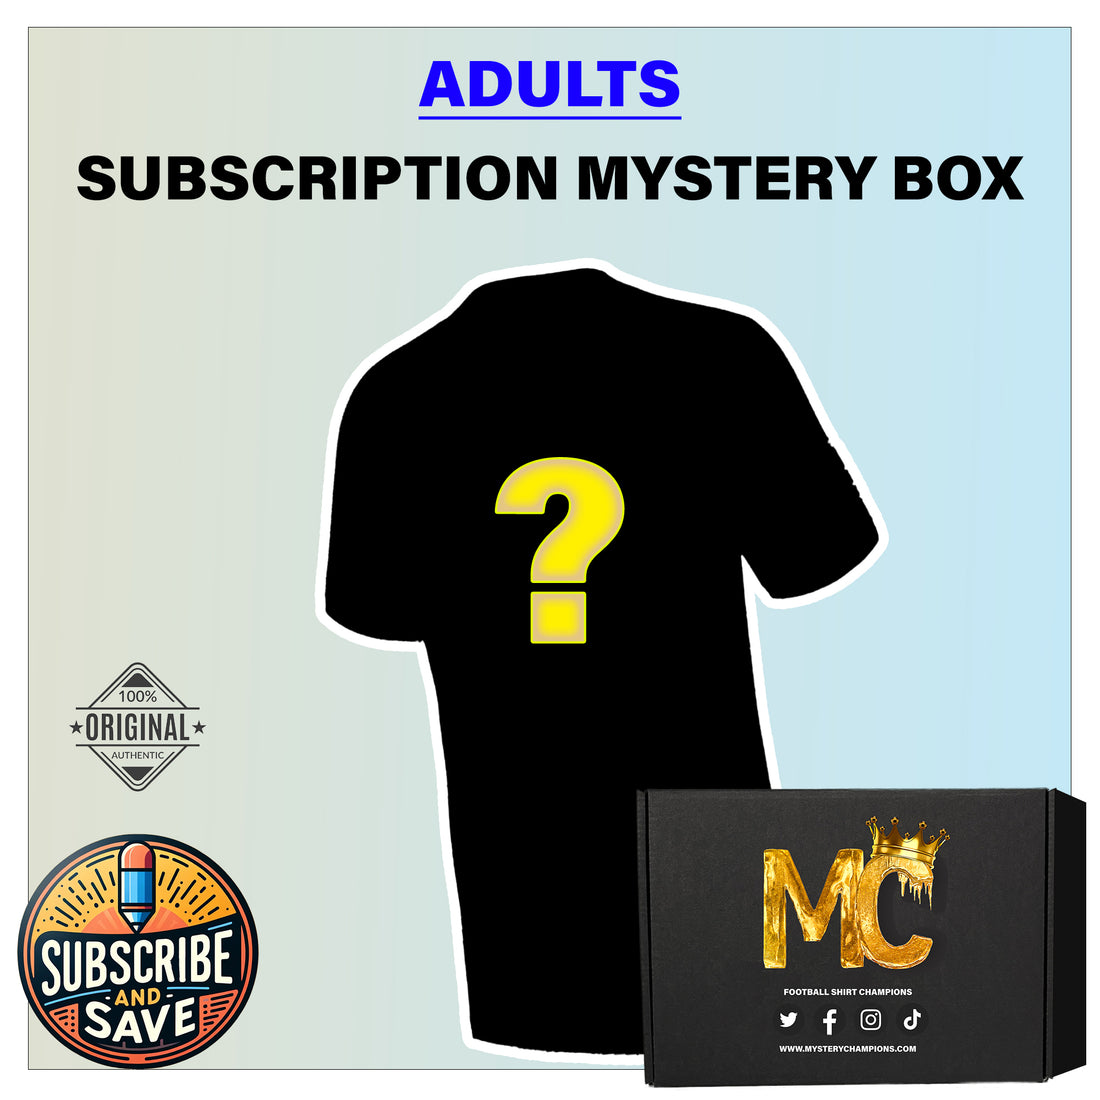 
  
  Subscription - Premium Mystery Football Shirt
  
